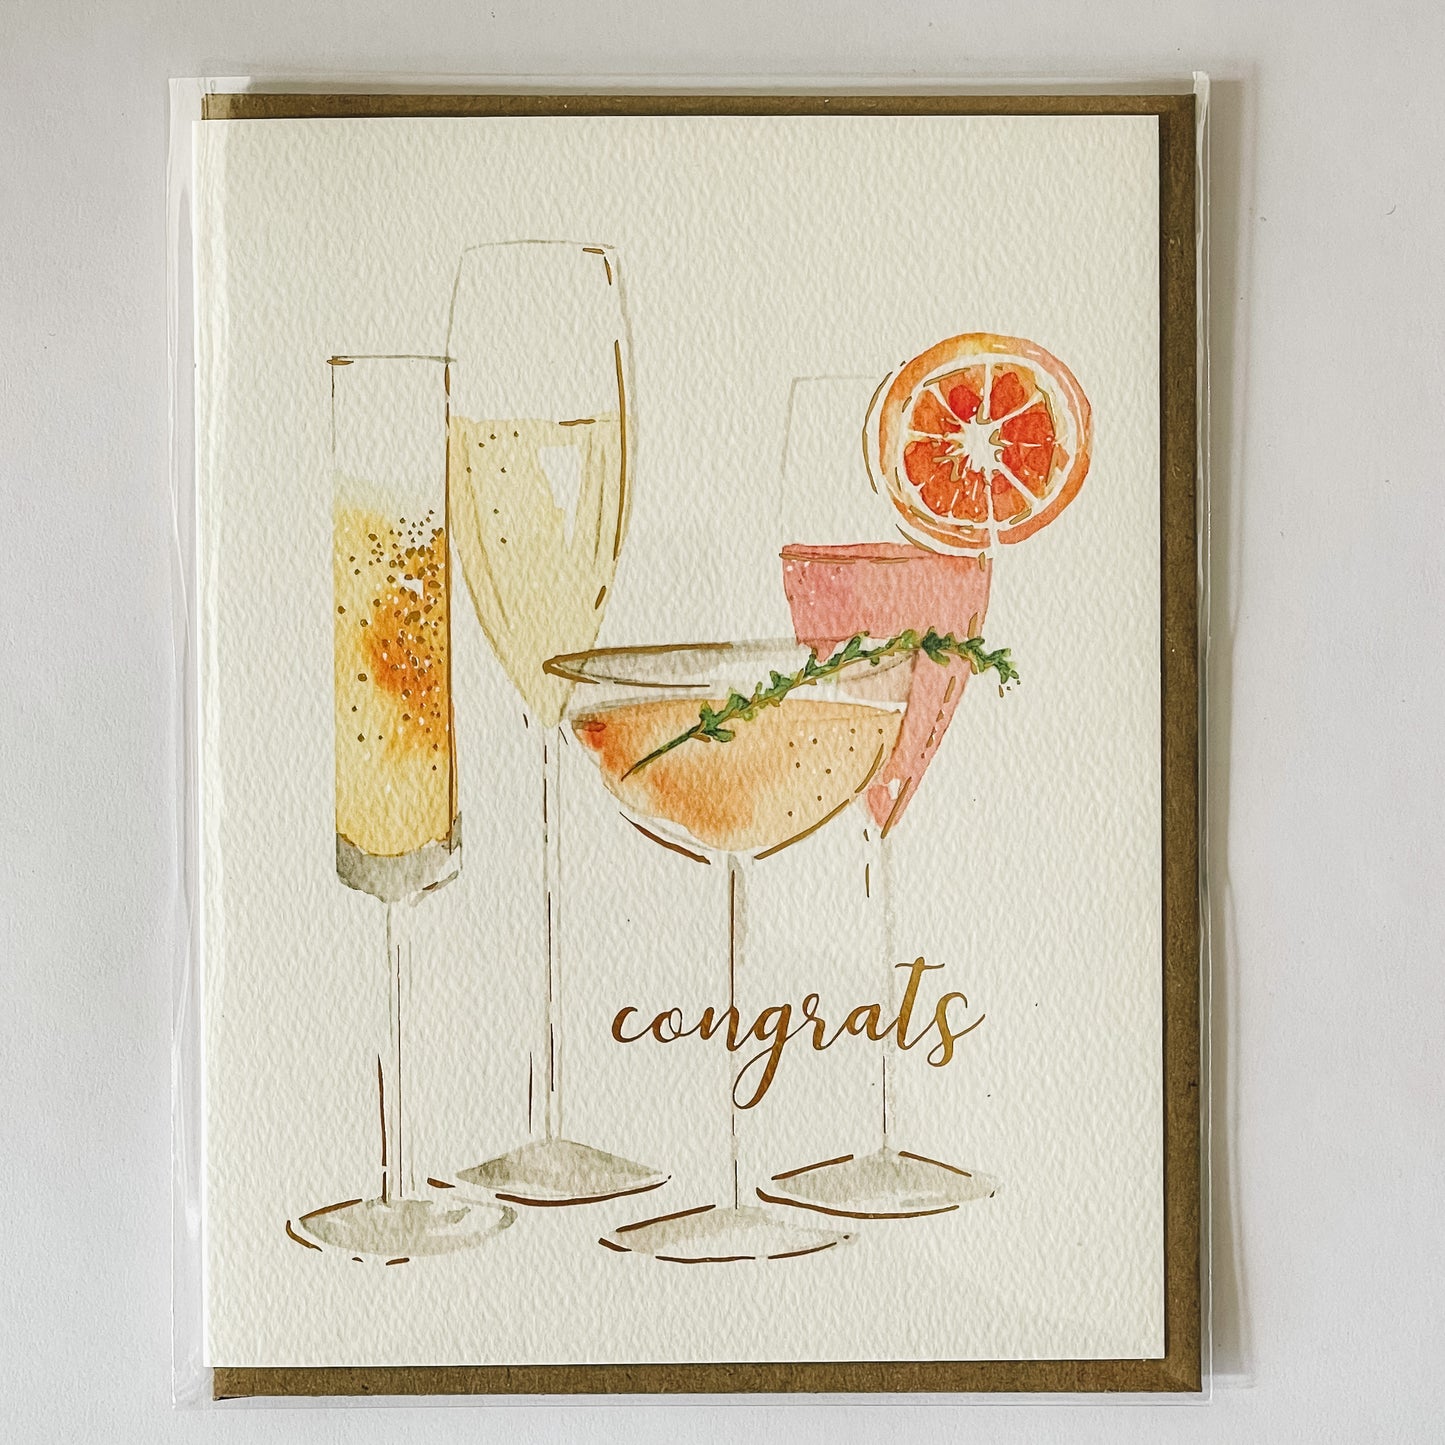 Handmade Watercolor Greeting Card | Bubbly Congrats